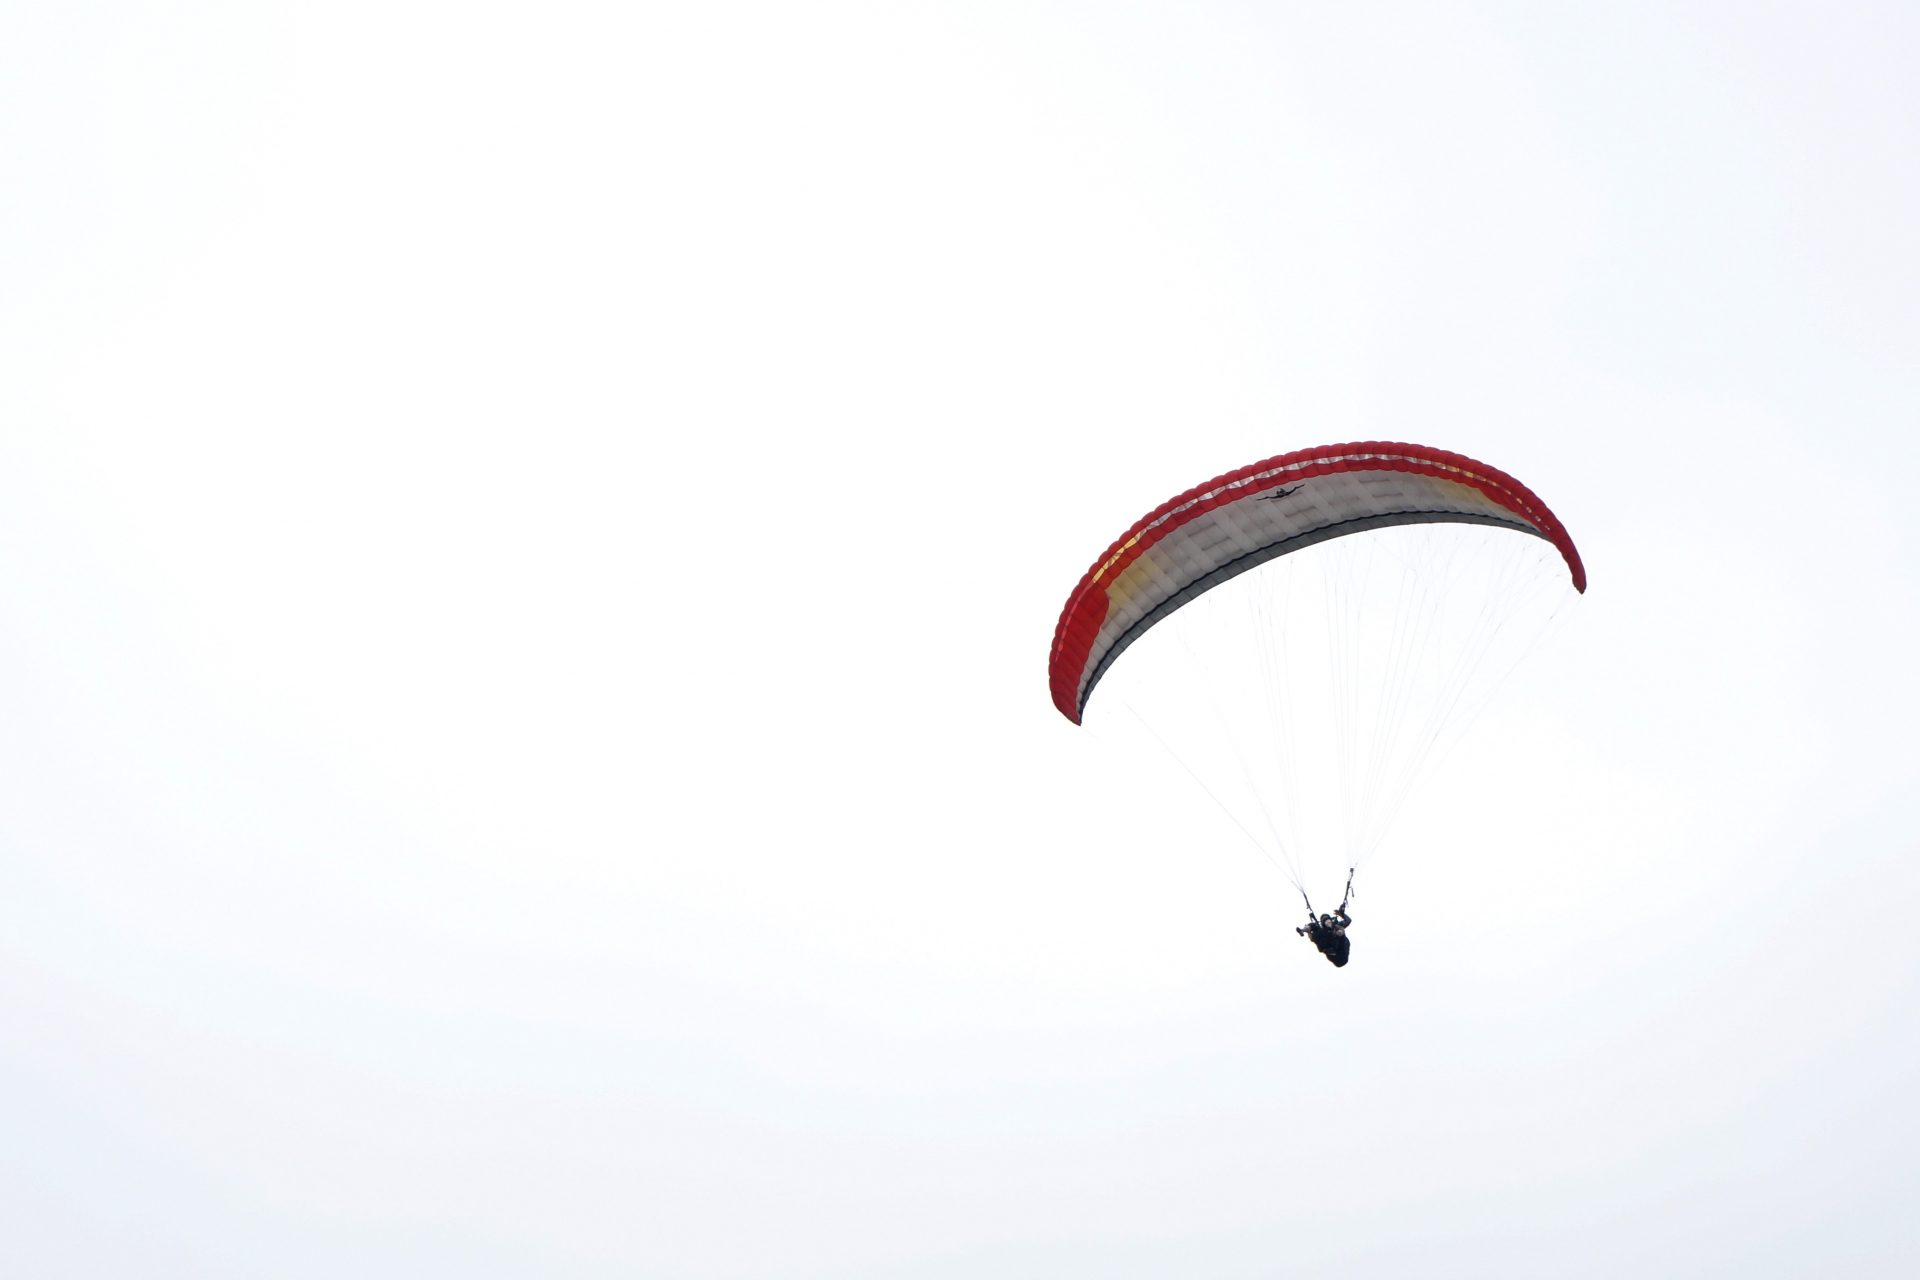 Parachutes descending onto a sports field 